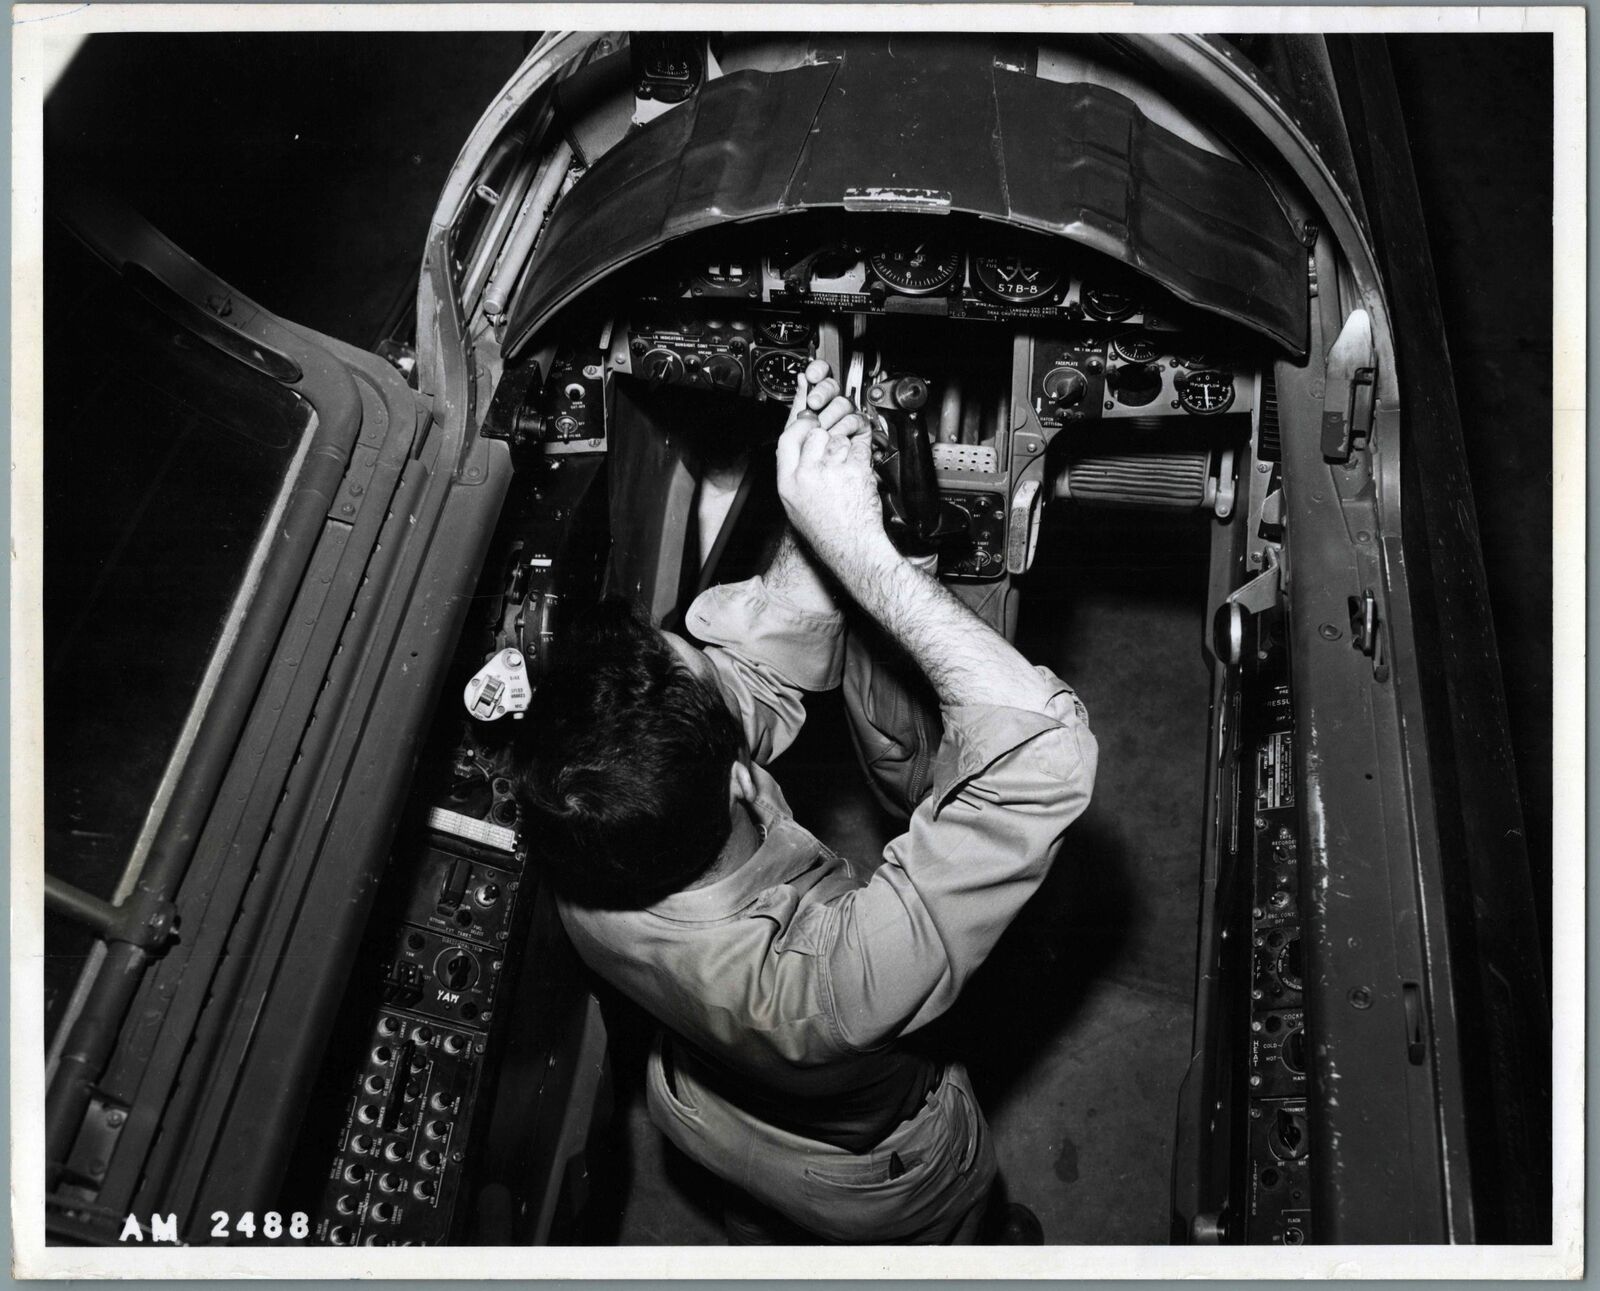 LOCKHEED XF-104 STARFIGHTER ORIGINAL MANUFACTURERS PHOTO FACTORY USAF COCKPIT